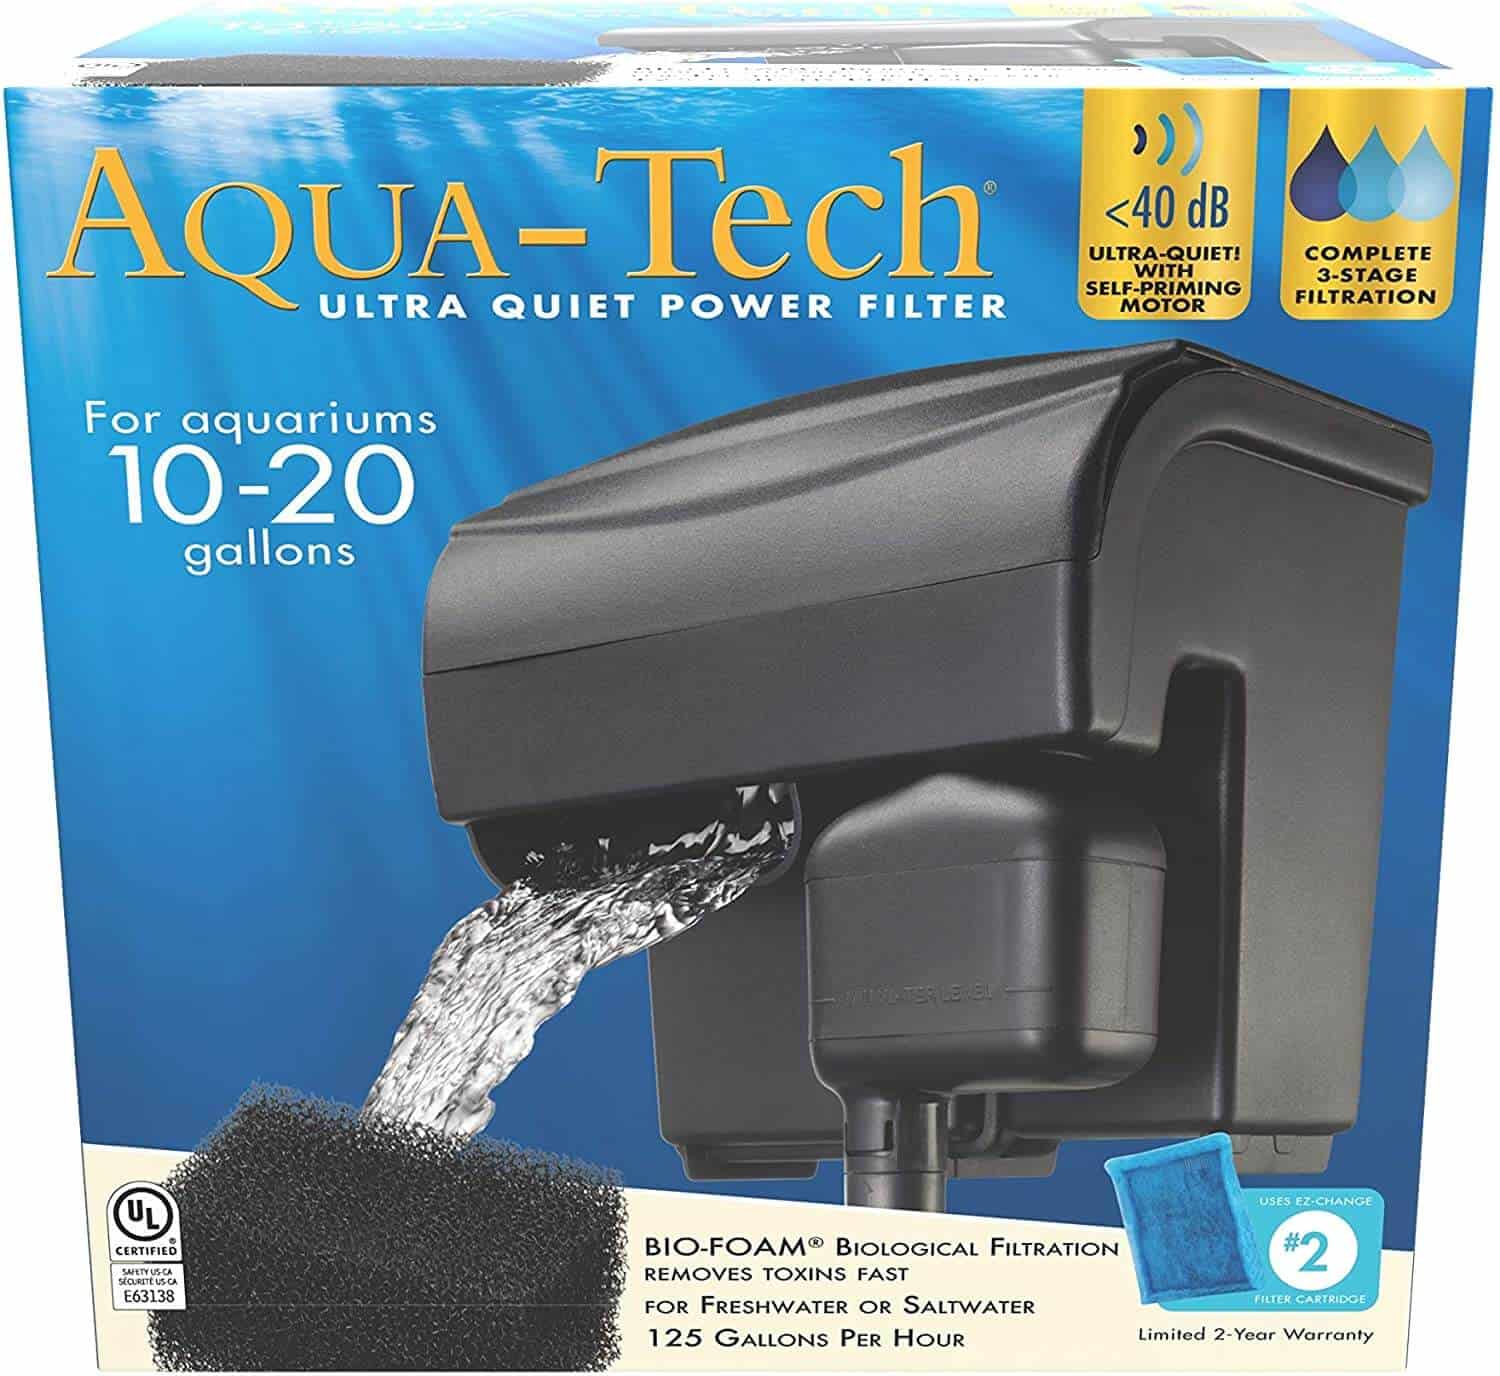 AQUA-TECH Power Filter for Aquariums